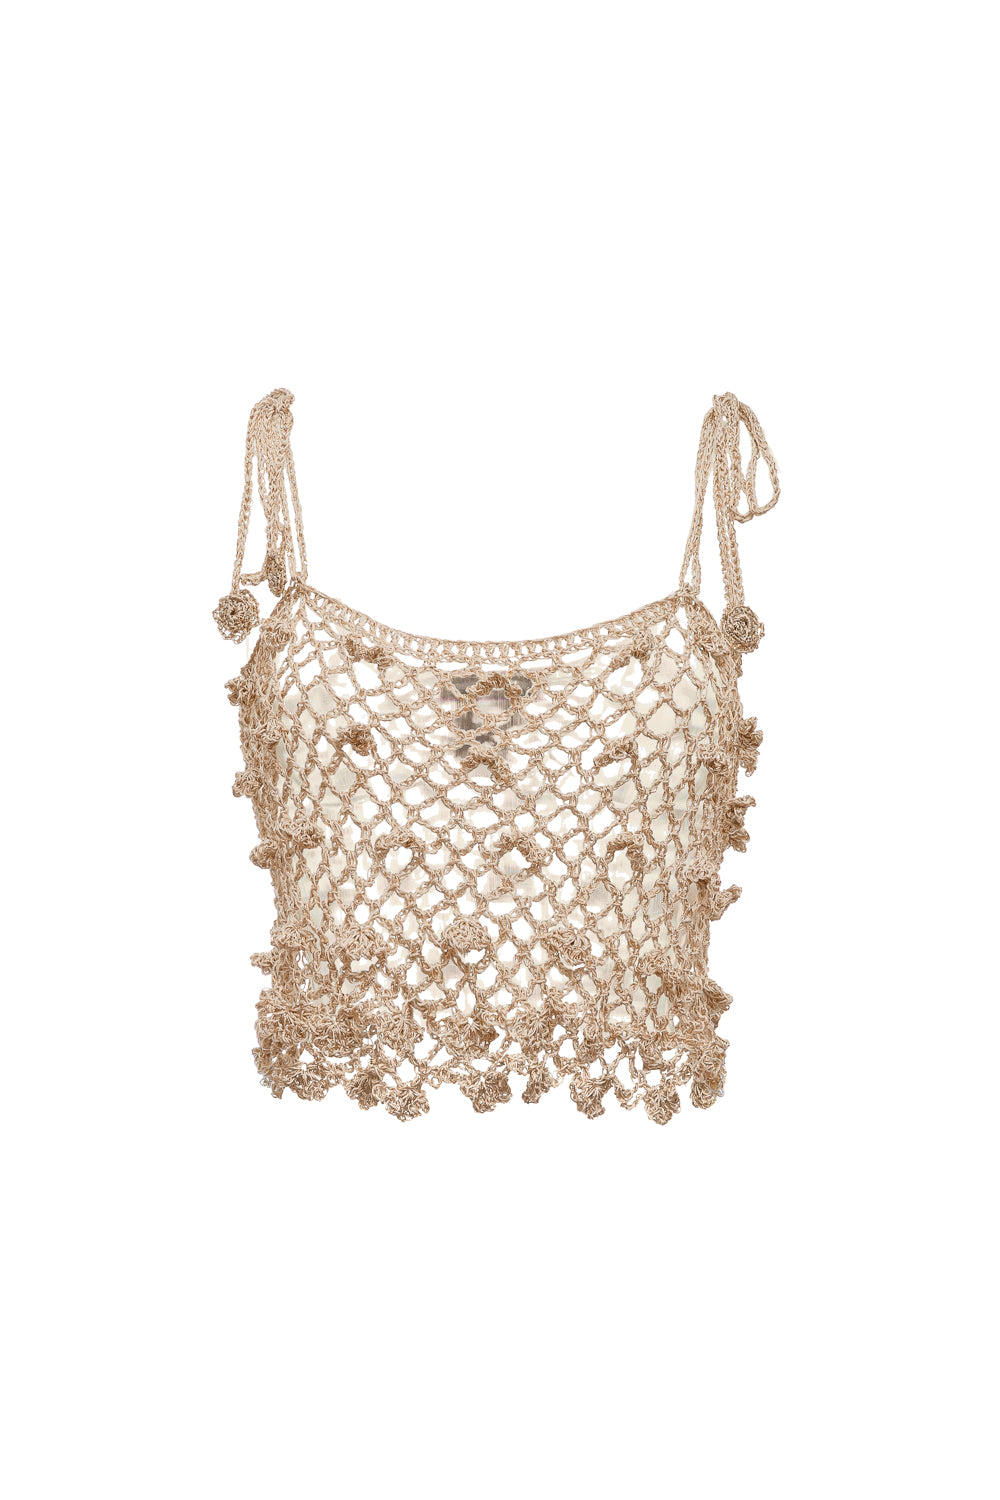 Women’s Gold / Silver Metallic Handmade Crochet Top Extra Large Andreeva